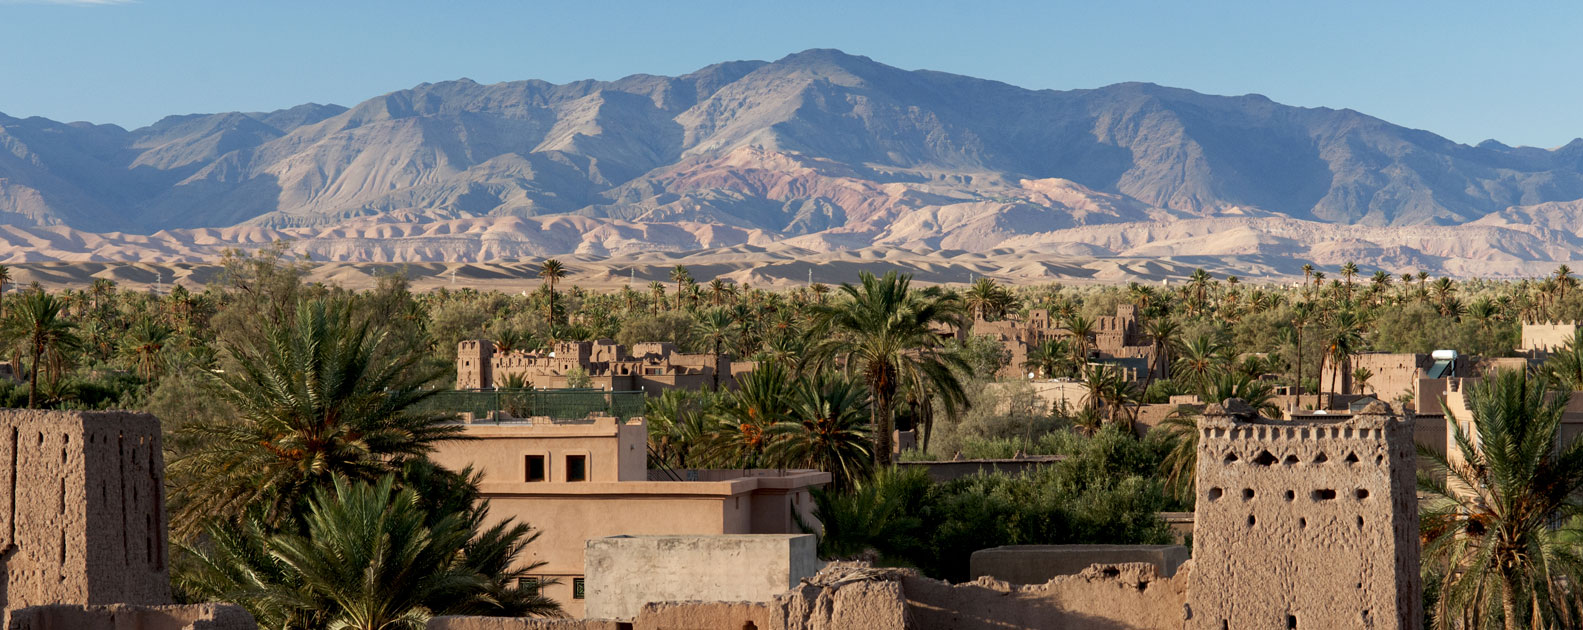 Ouarzazate-Zagoura-Tinghir, A must-see movie set